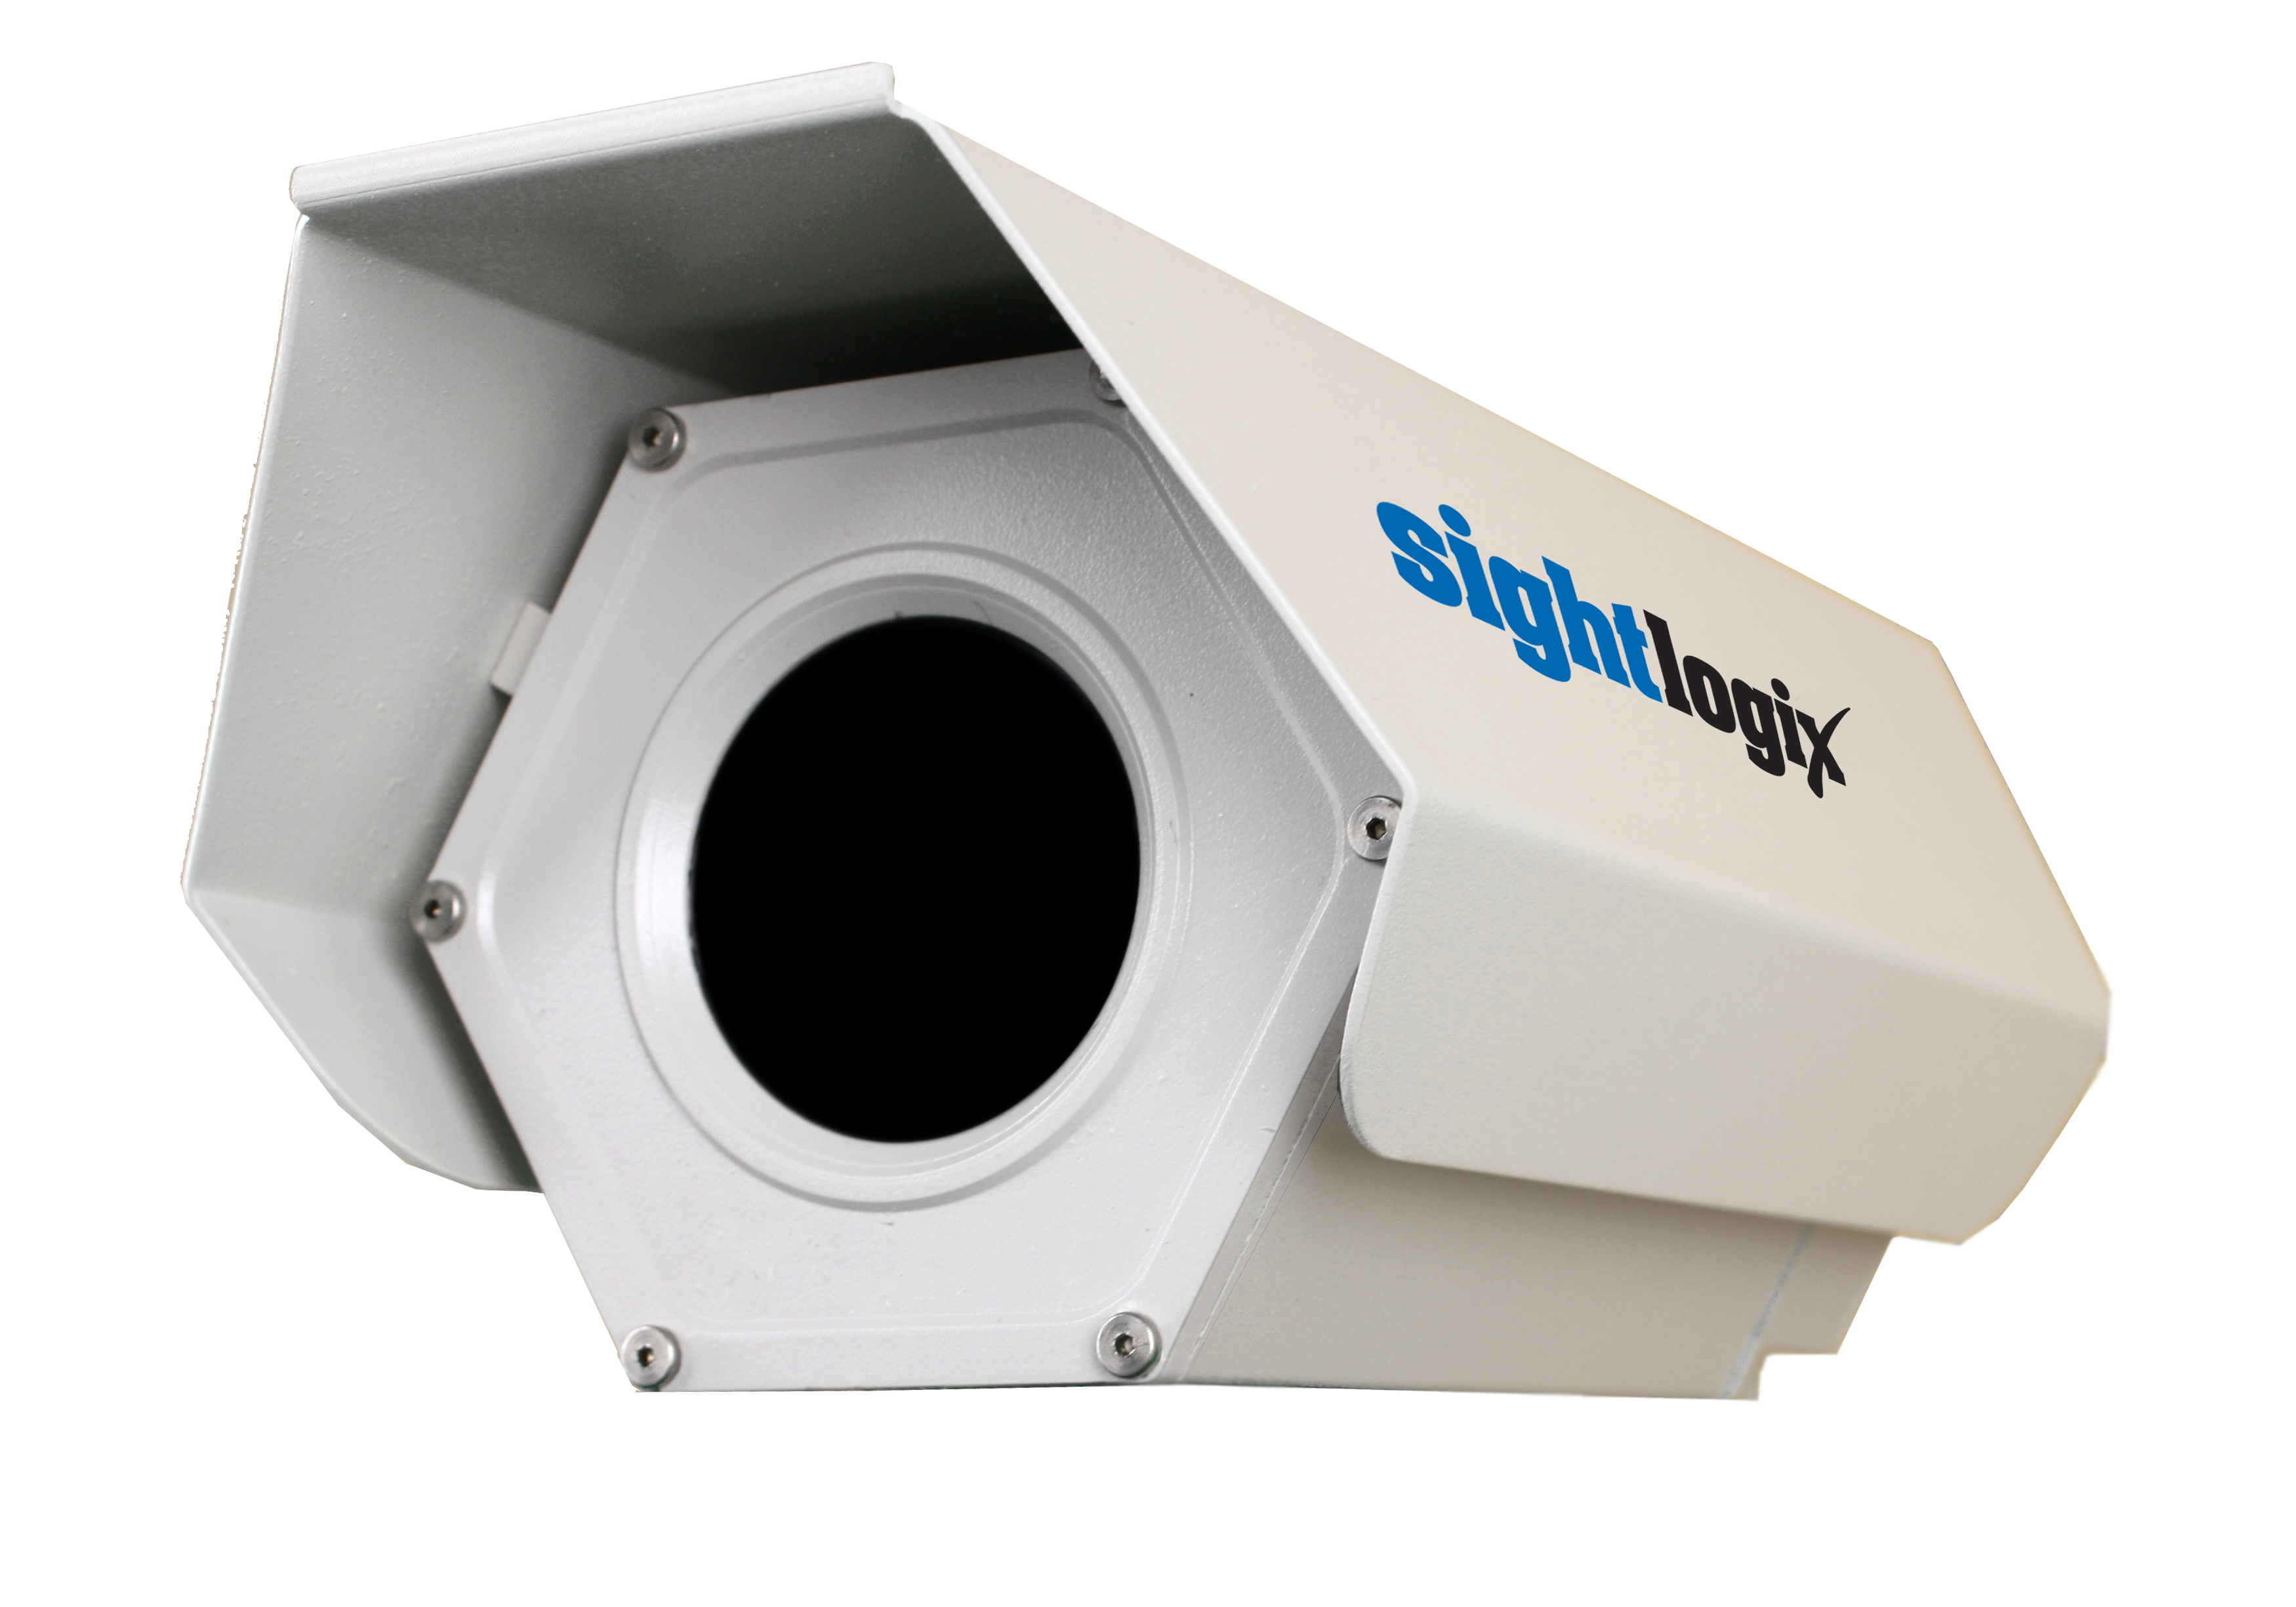 SightSensor Smart Thermal Camera